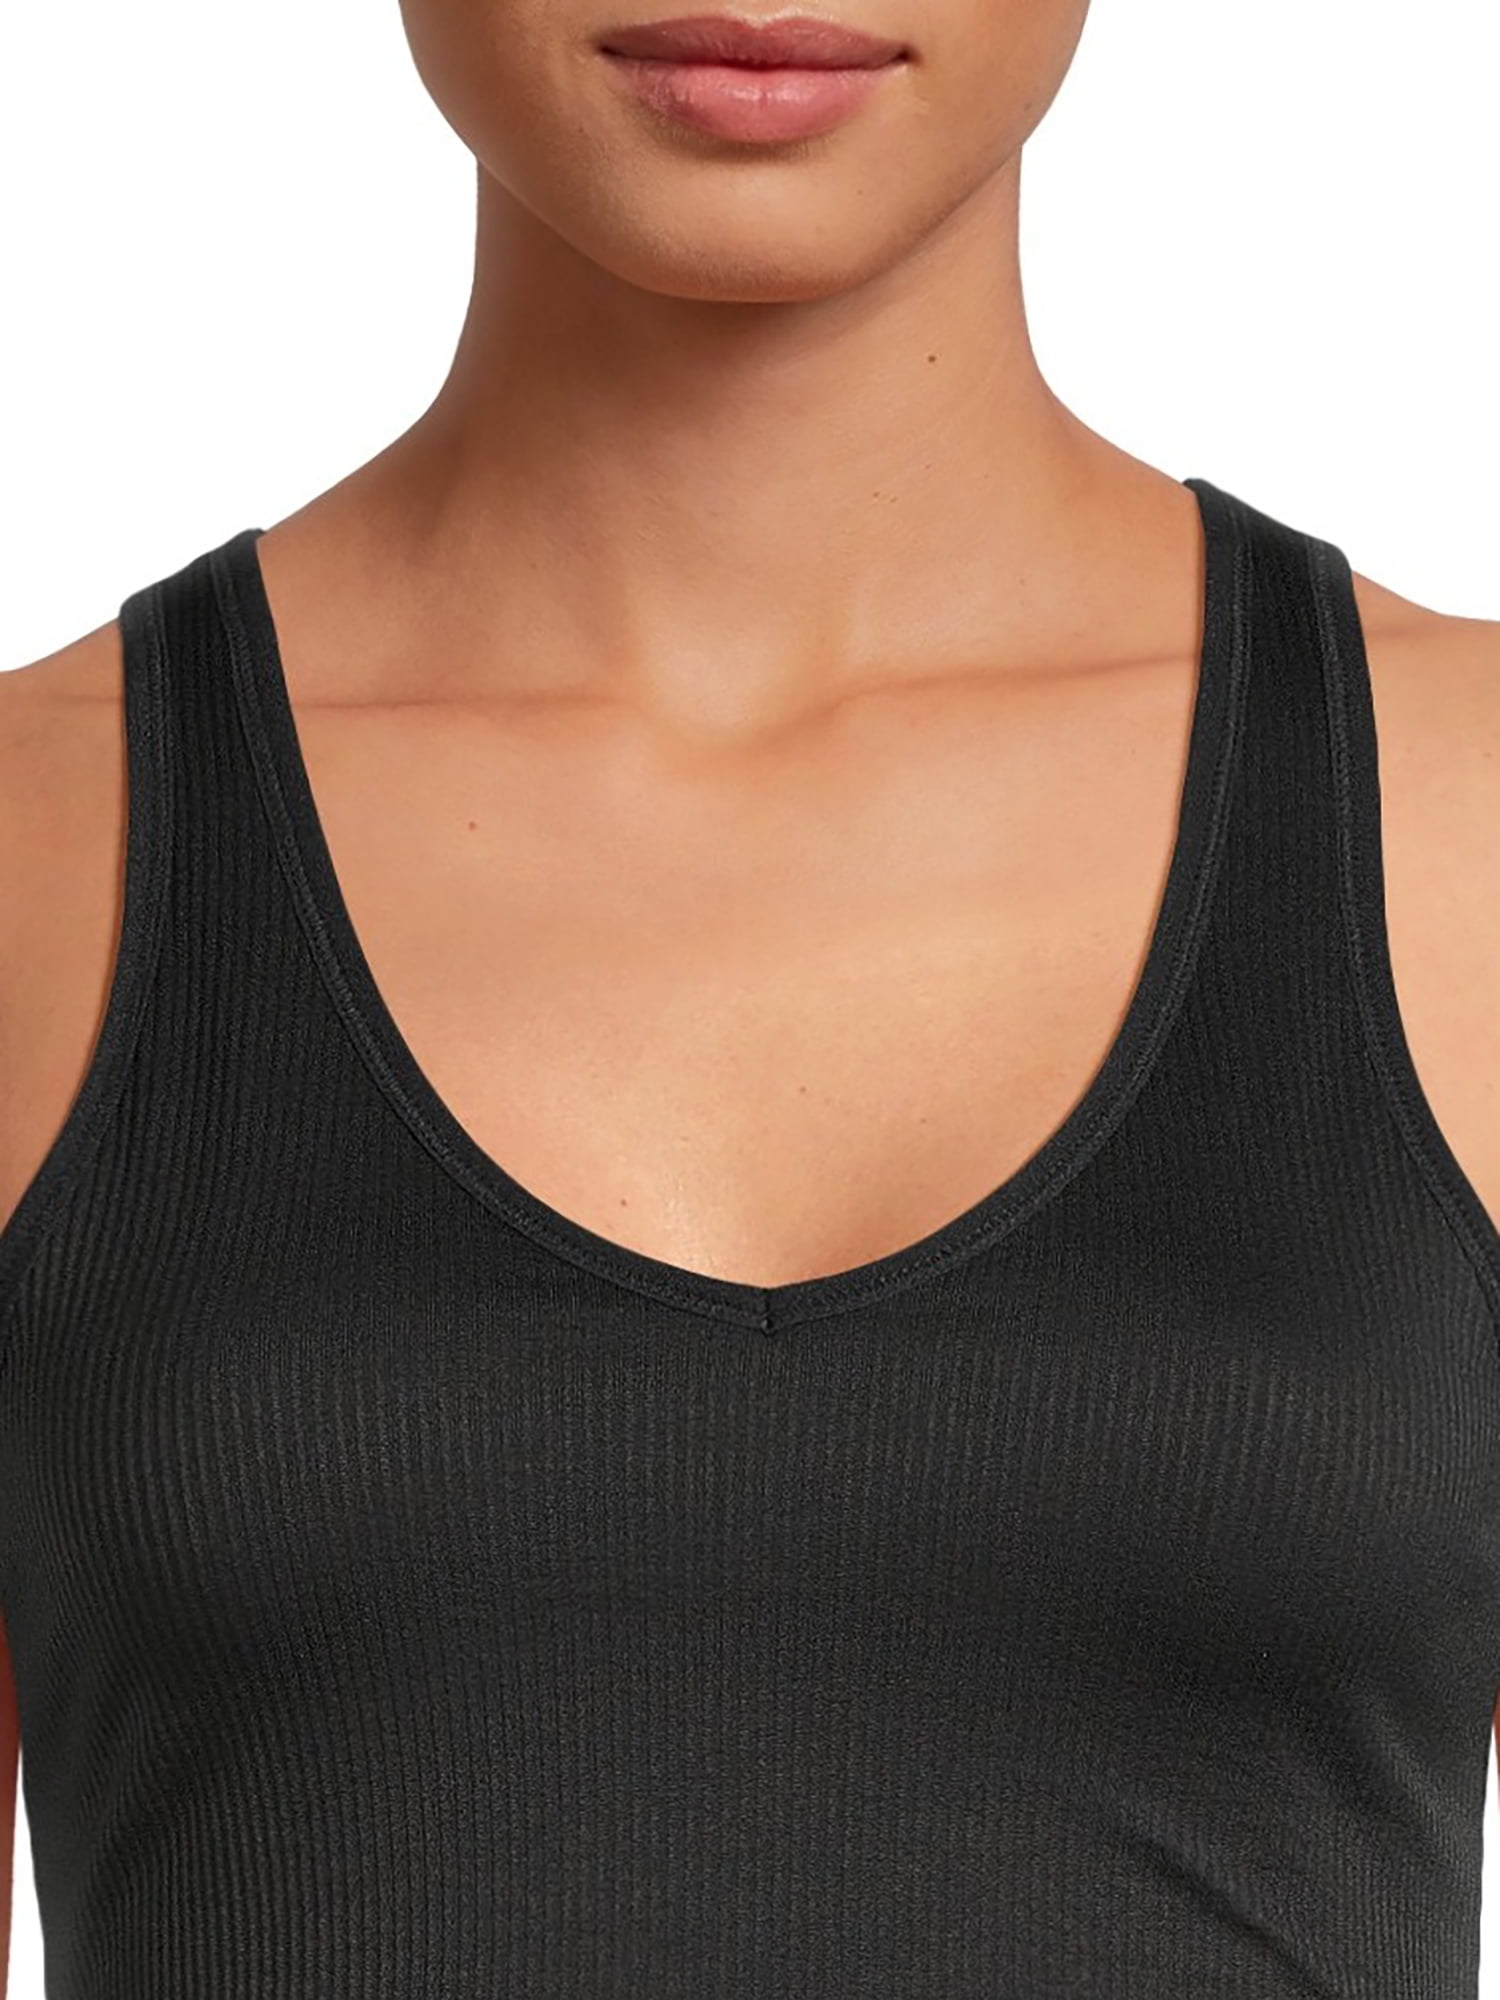 Avia Women's Ruched V-Neck Sports Bra Size XS - $11 - From Sharleene